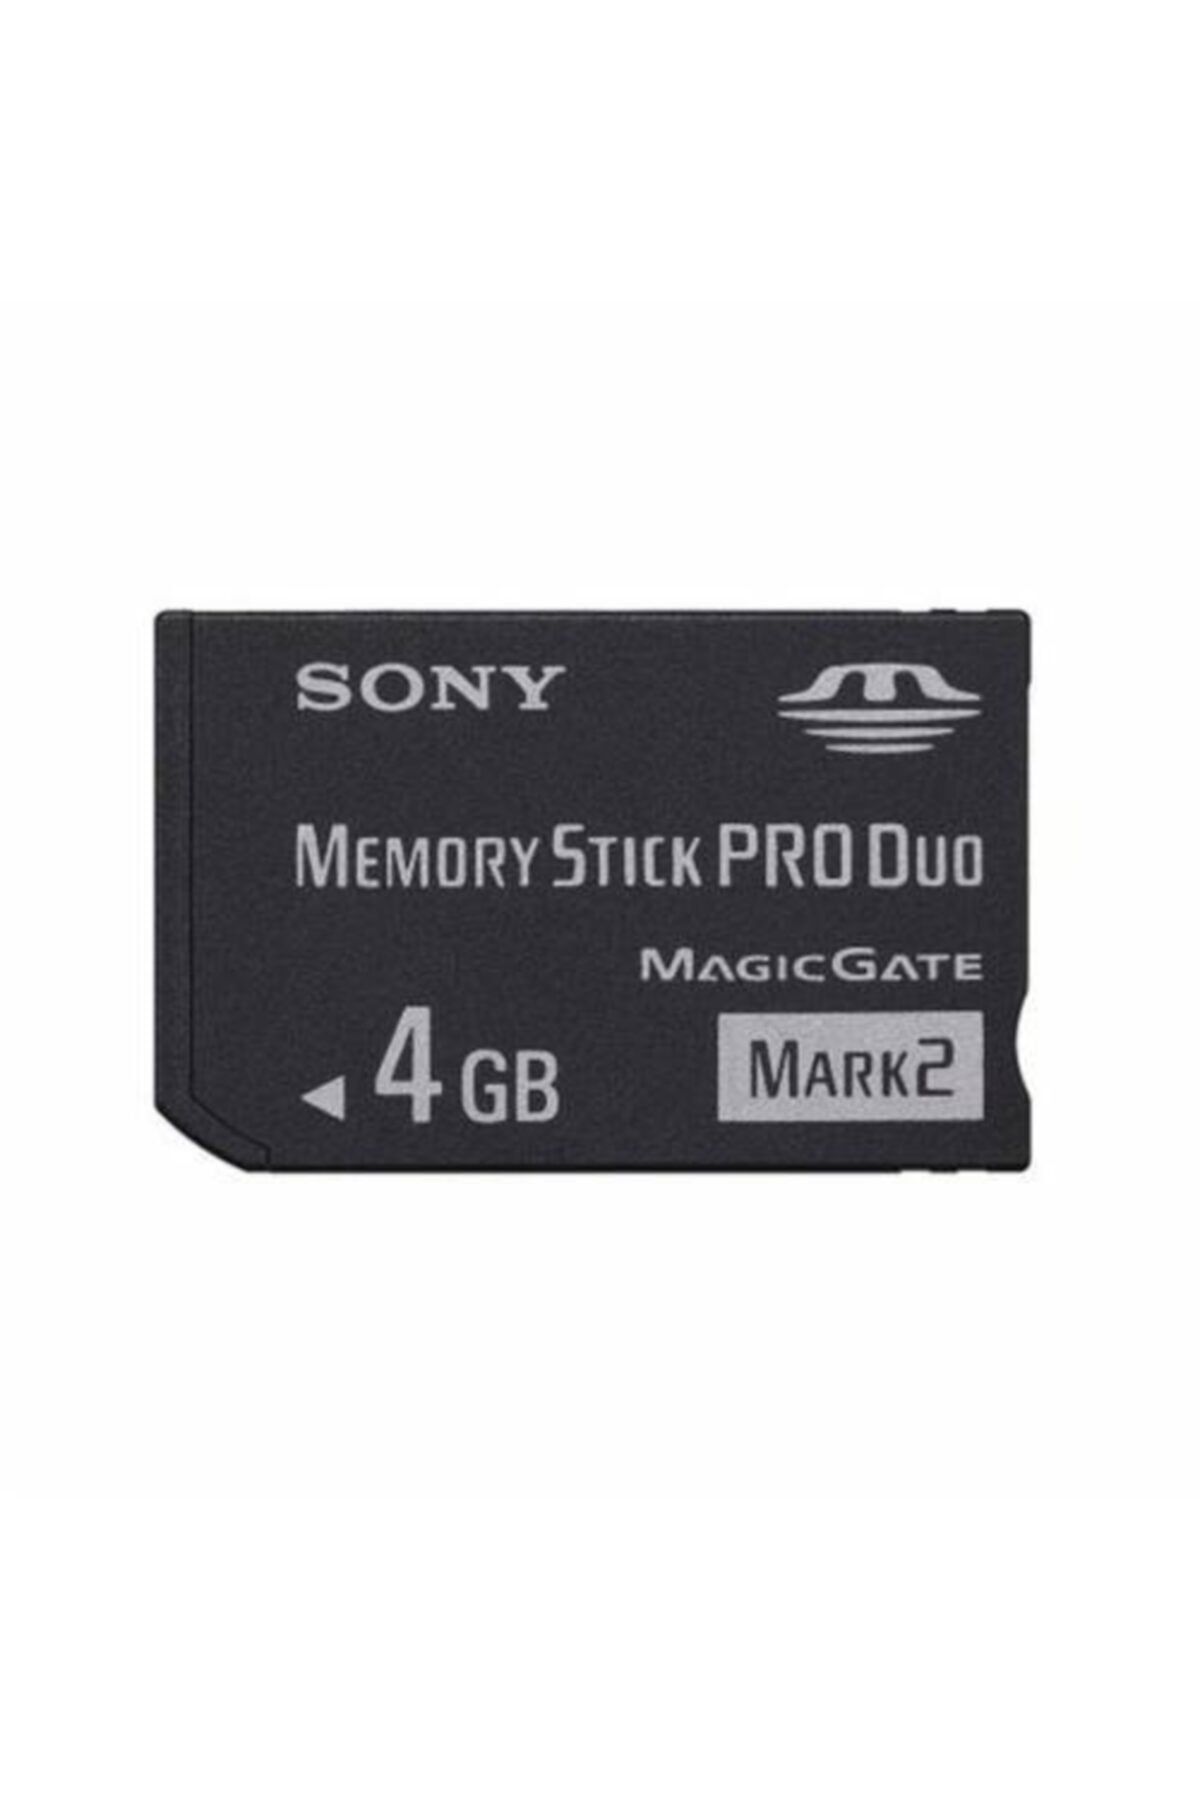 Sony Memory Stick Pro Duo 4 Gb